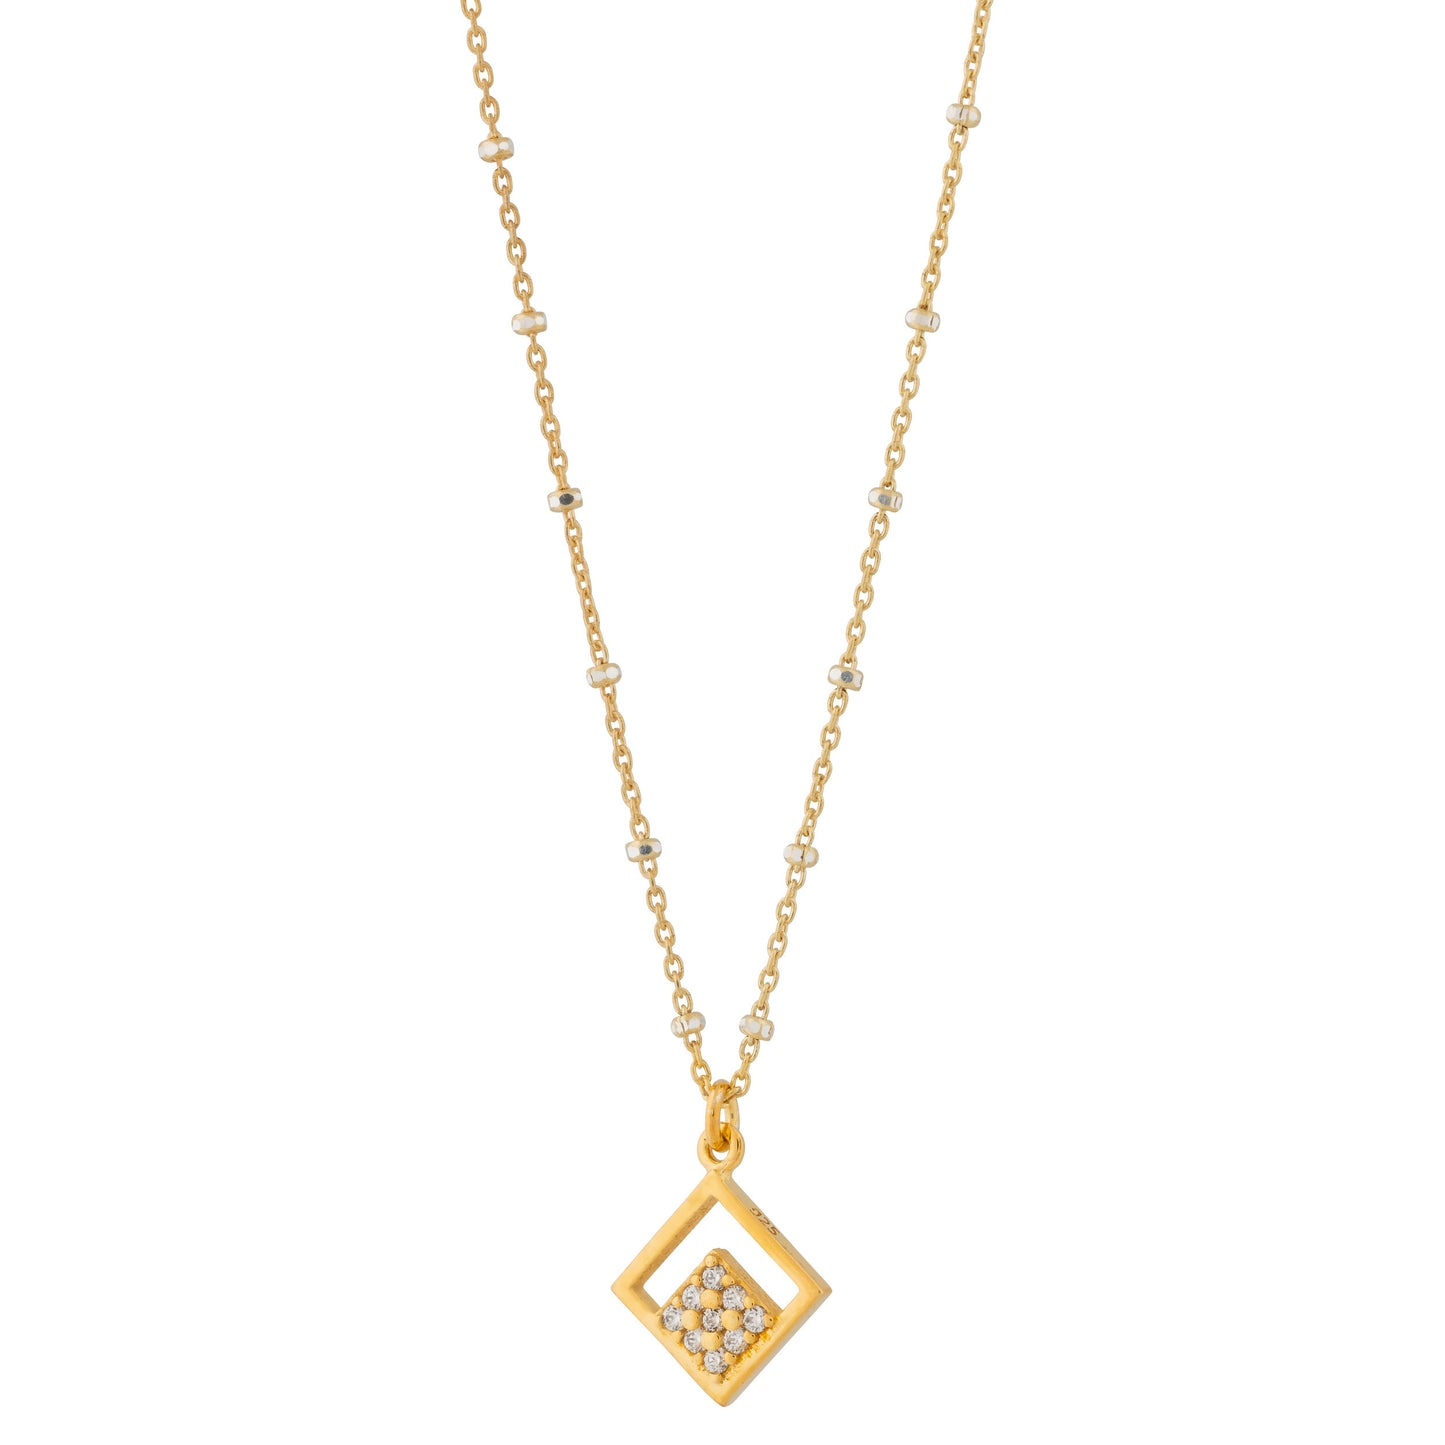 Three Rhombus Necklace - Gold